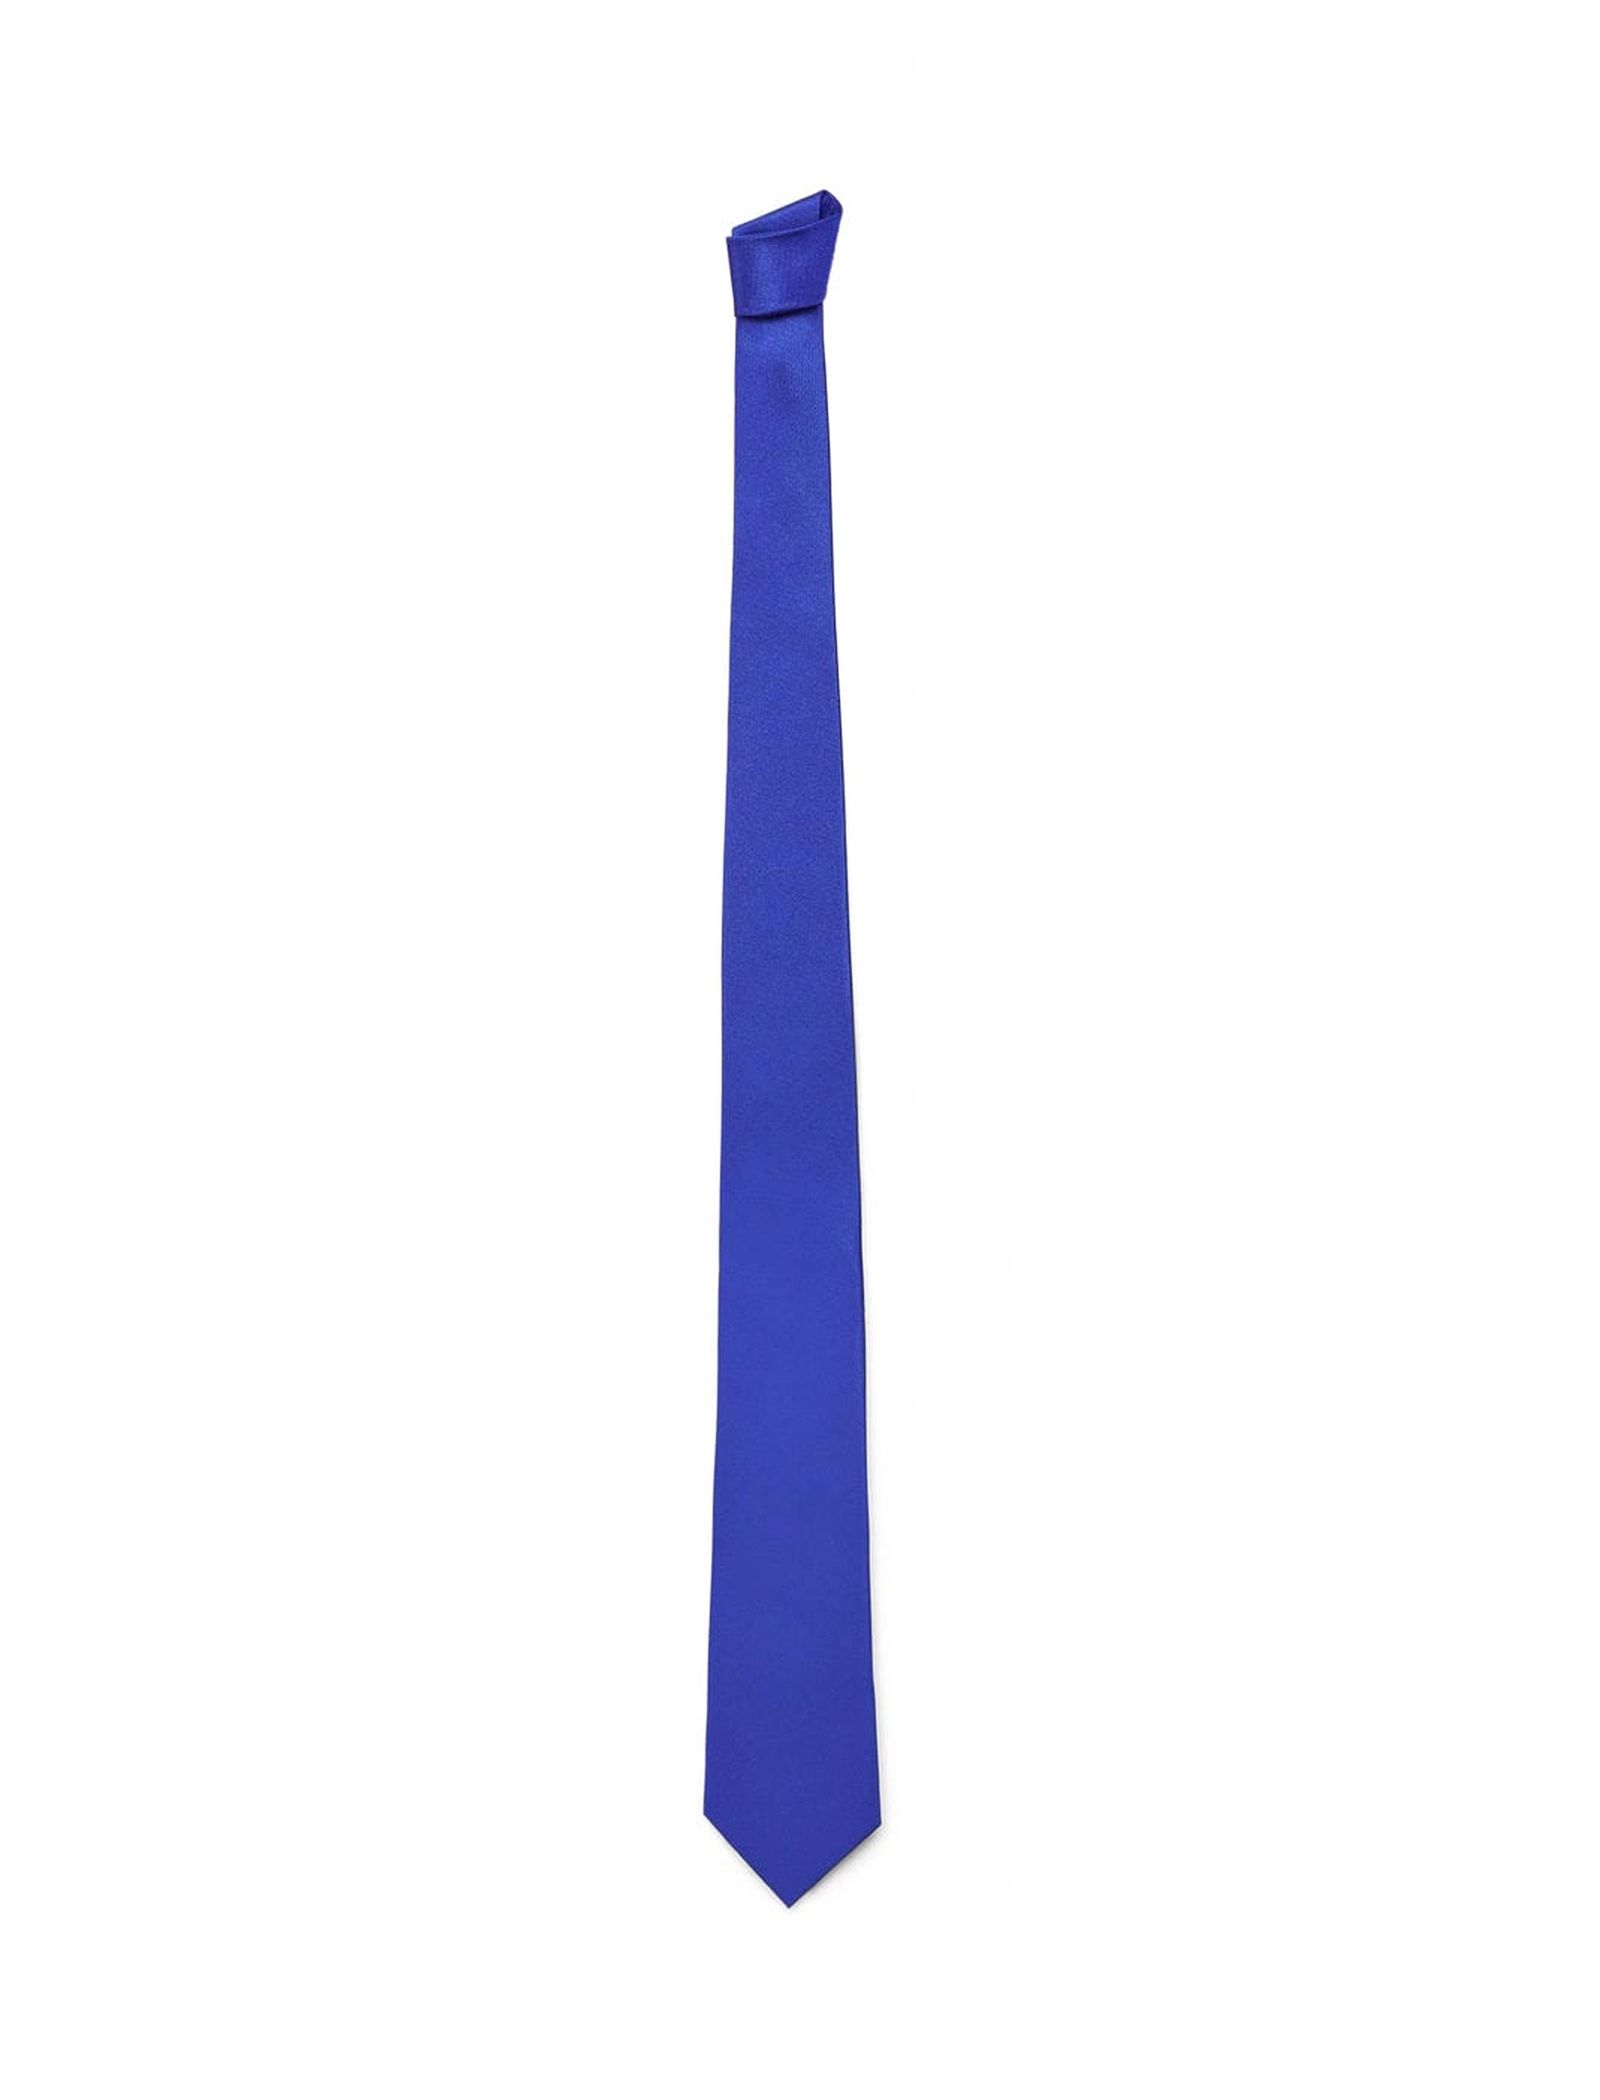 کراوات مانگو مدل 23070660 تک سایز - آبي - 1